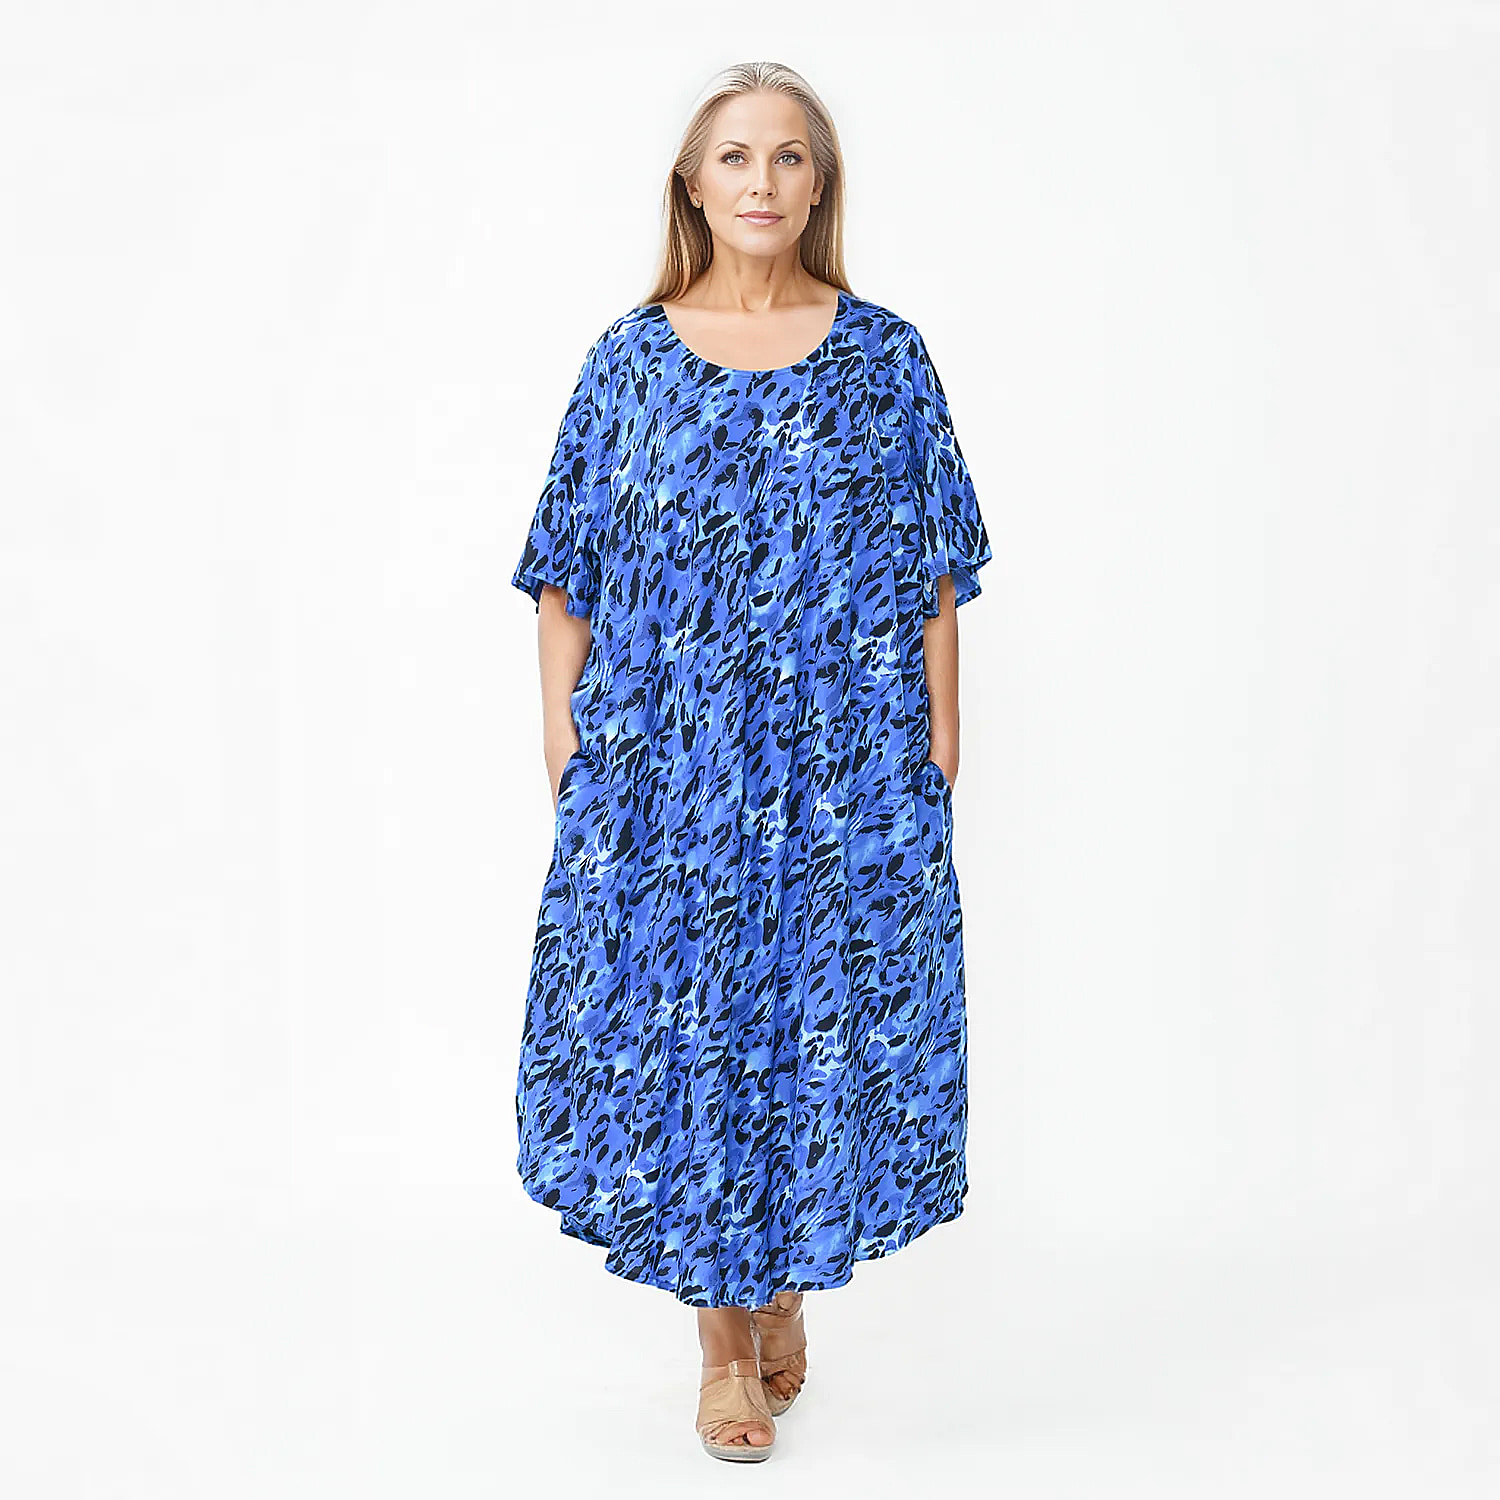 Tamsy 100% Viscose Leaf Printed Dress - Blue One